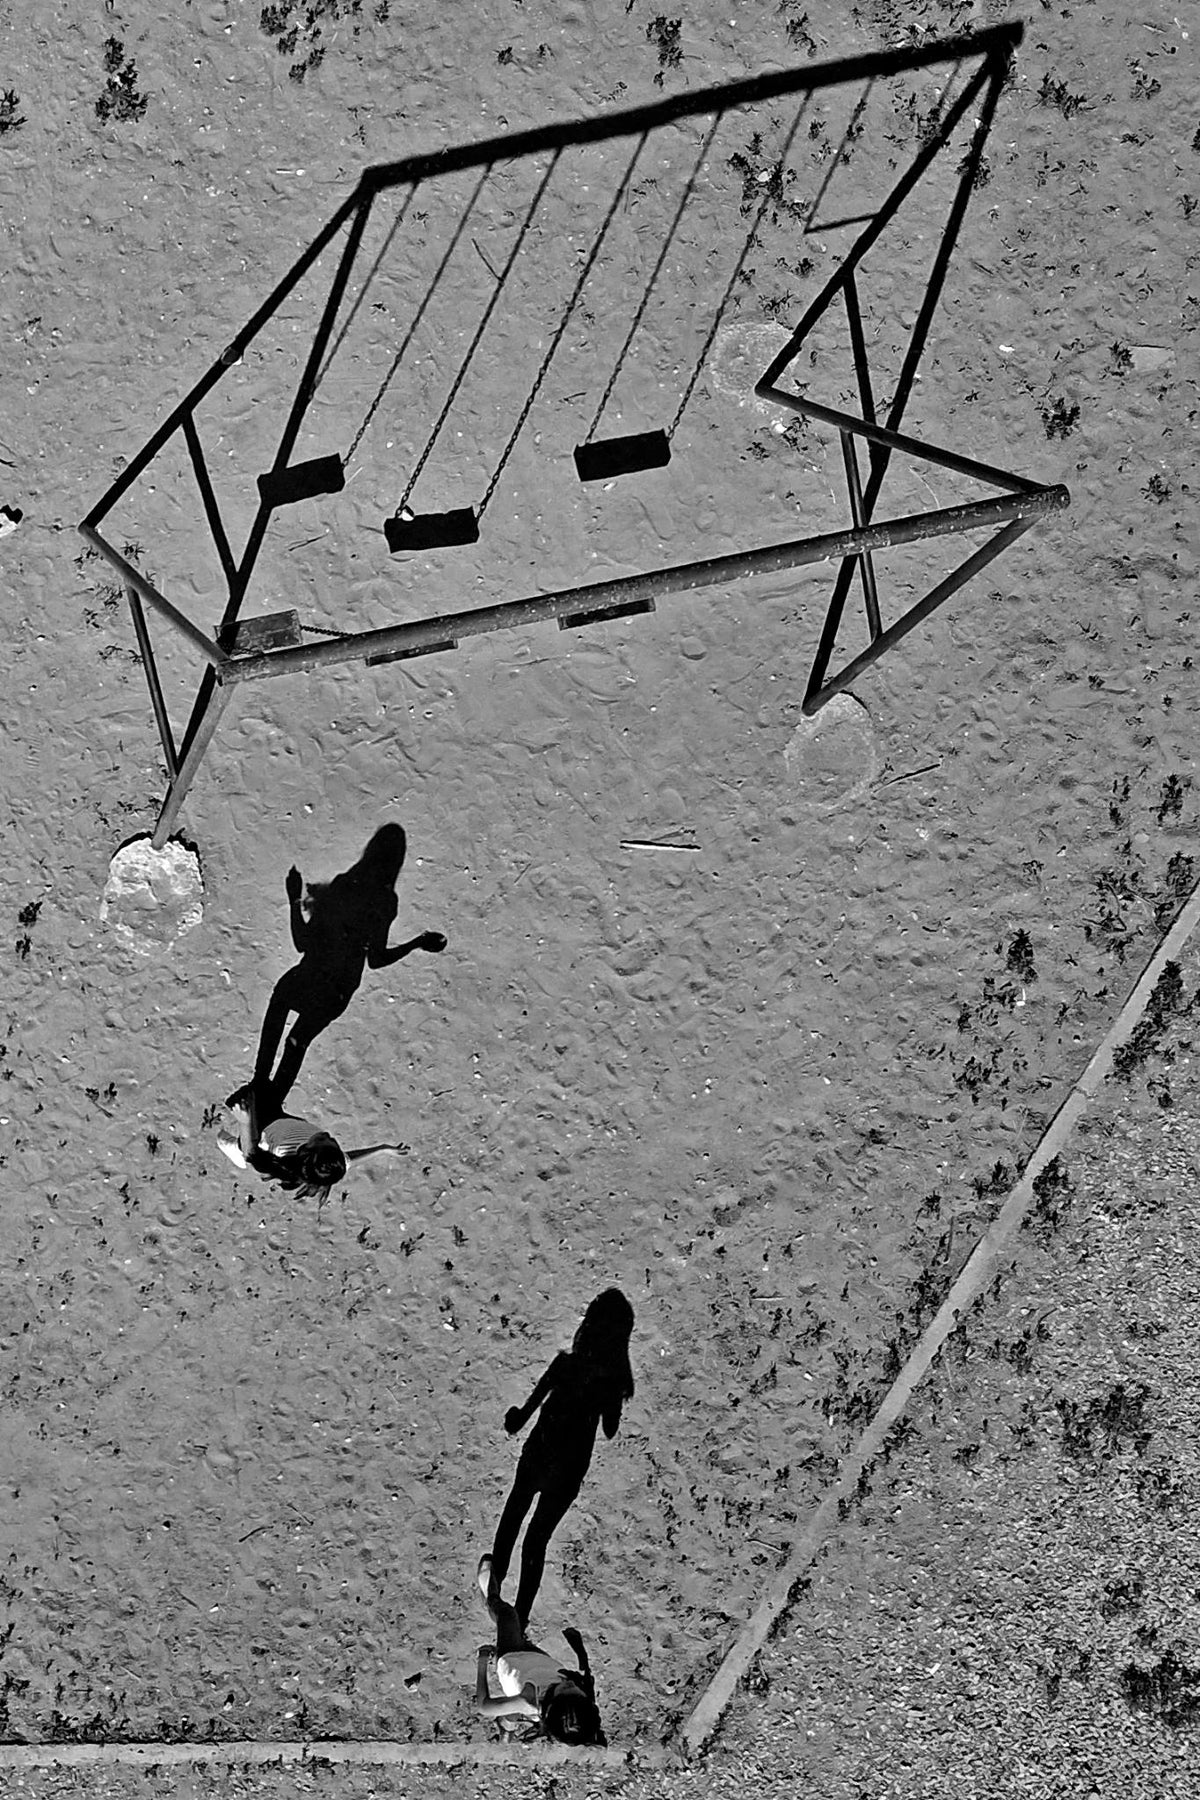 Francisco Mata Rosas Photography Children's game and shadows - Francisco Mata Rosas Photography Children's game and shadows - 5 Pieces Gallery - Contemporary Art & Photography